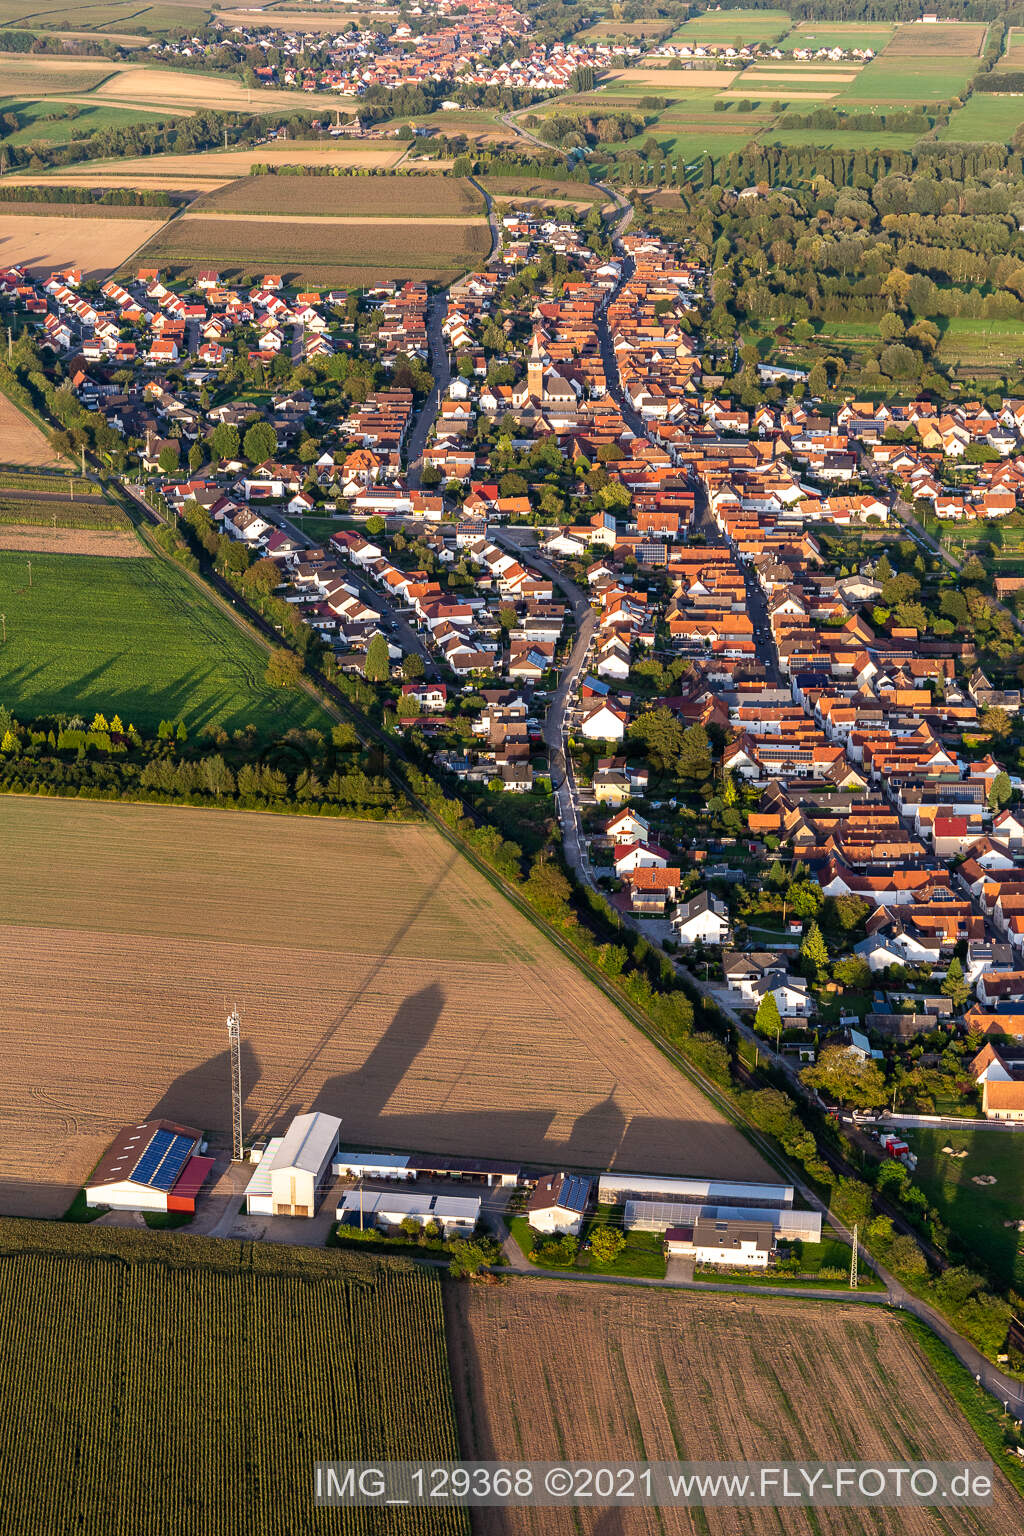 Drone recording of District Schaidt in Wörth am Rhein in the state Rhineland-Palatinate, Germany